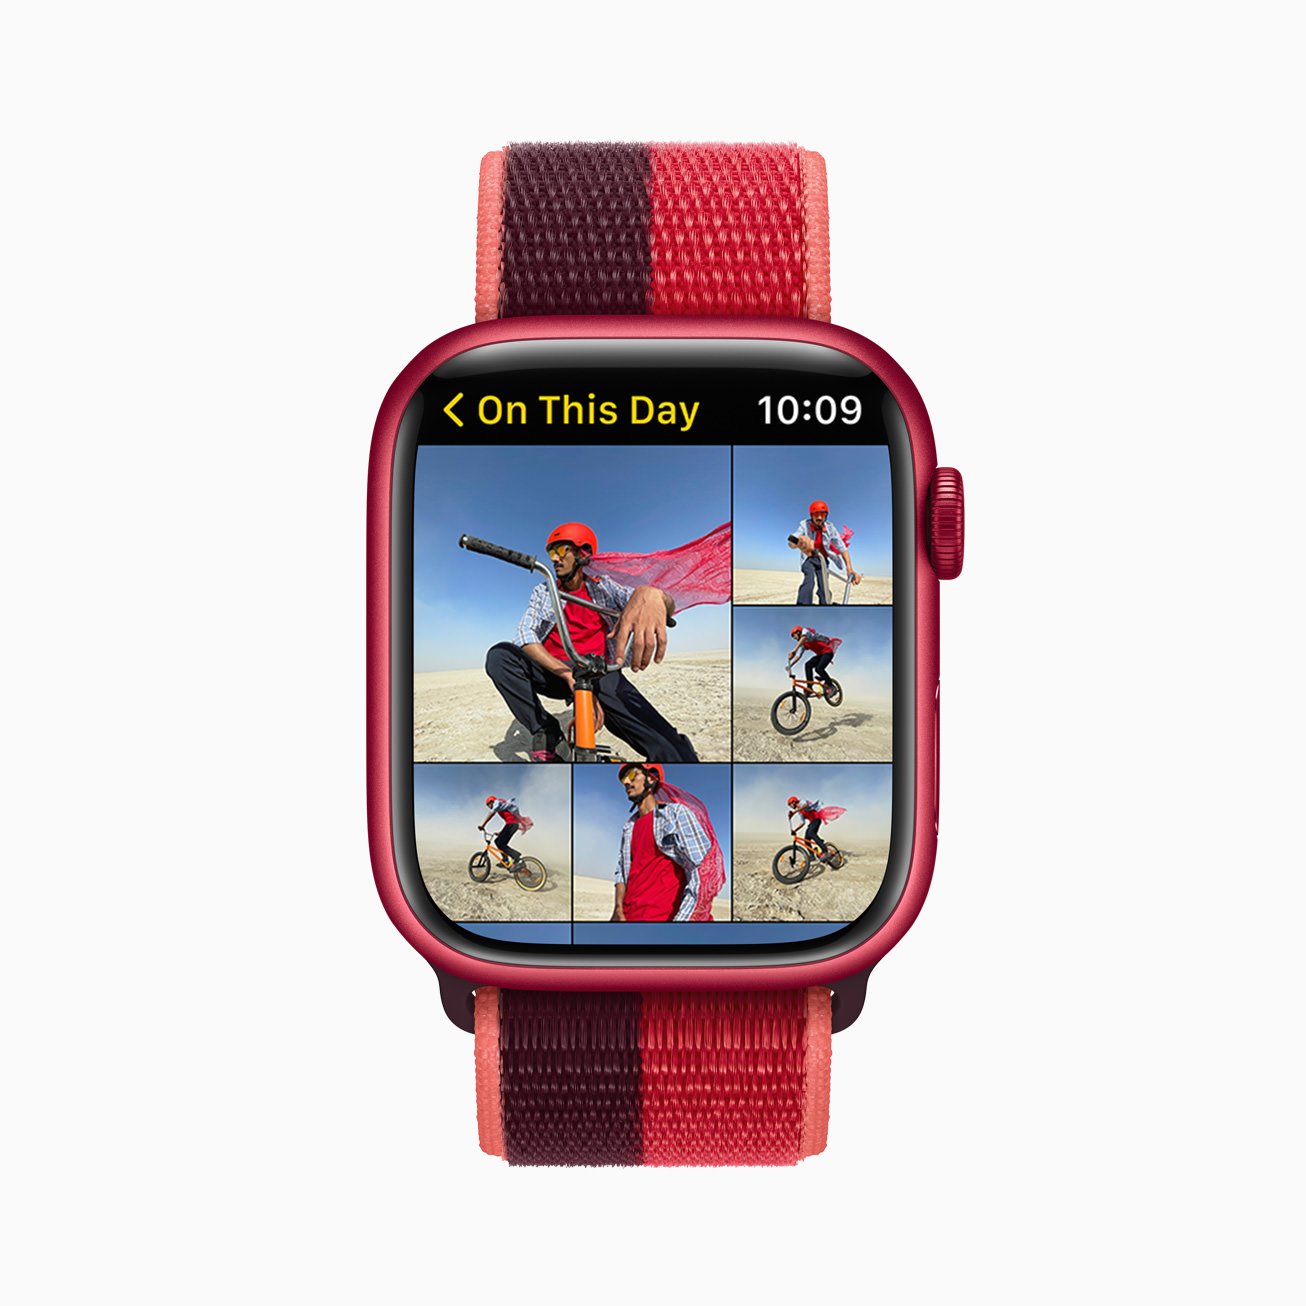 「Apple Watch Series 7」発表、今秋後半に発売